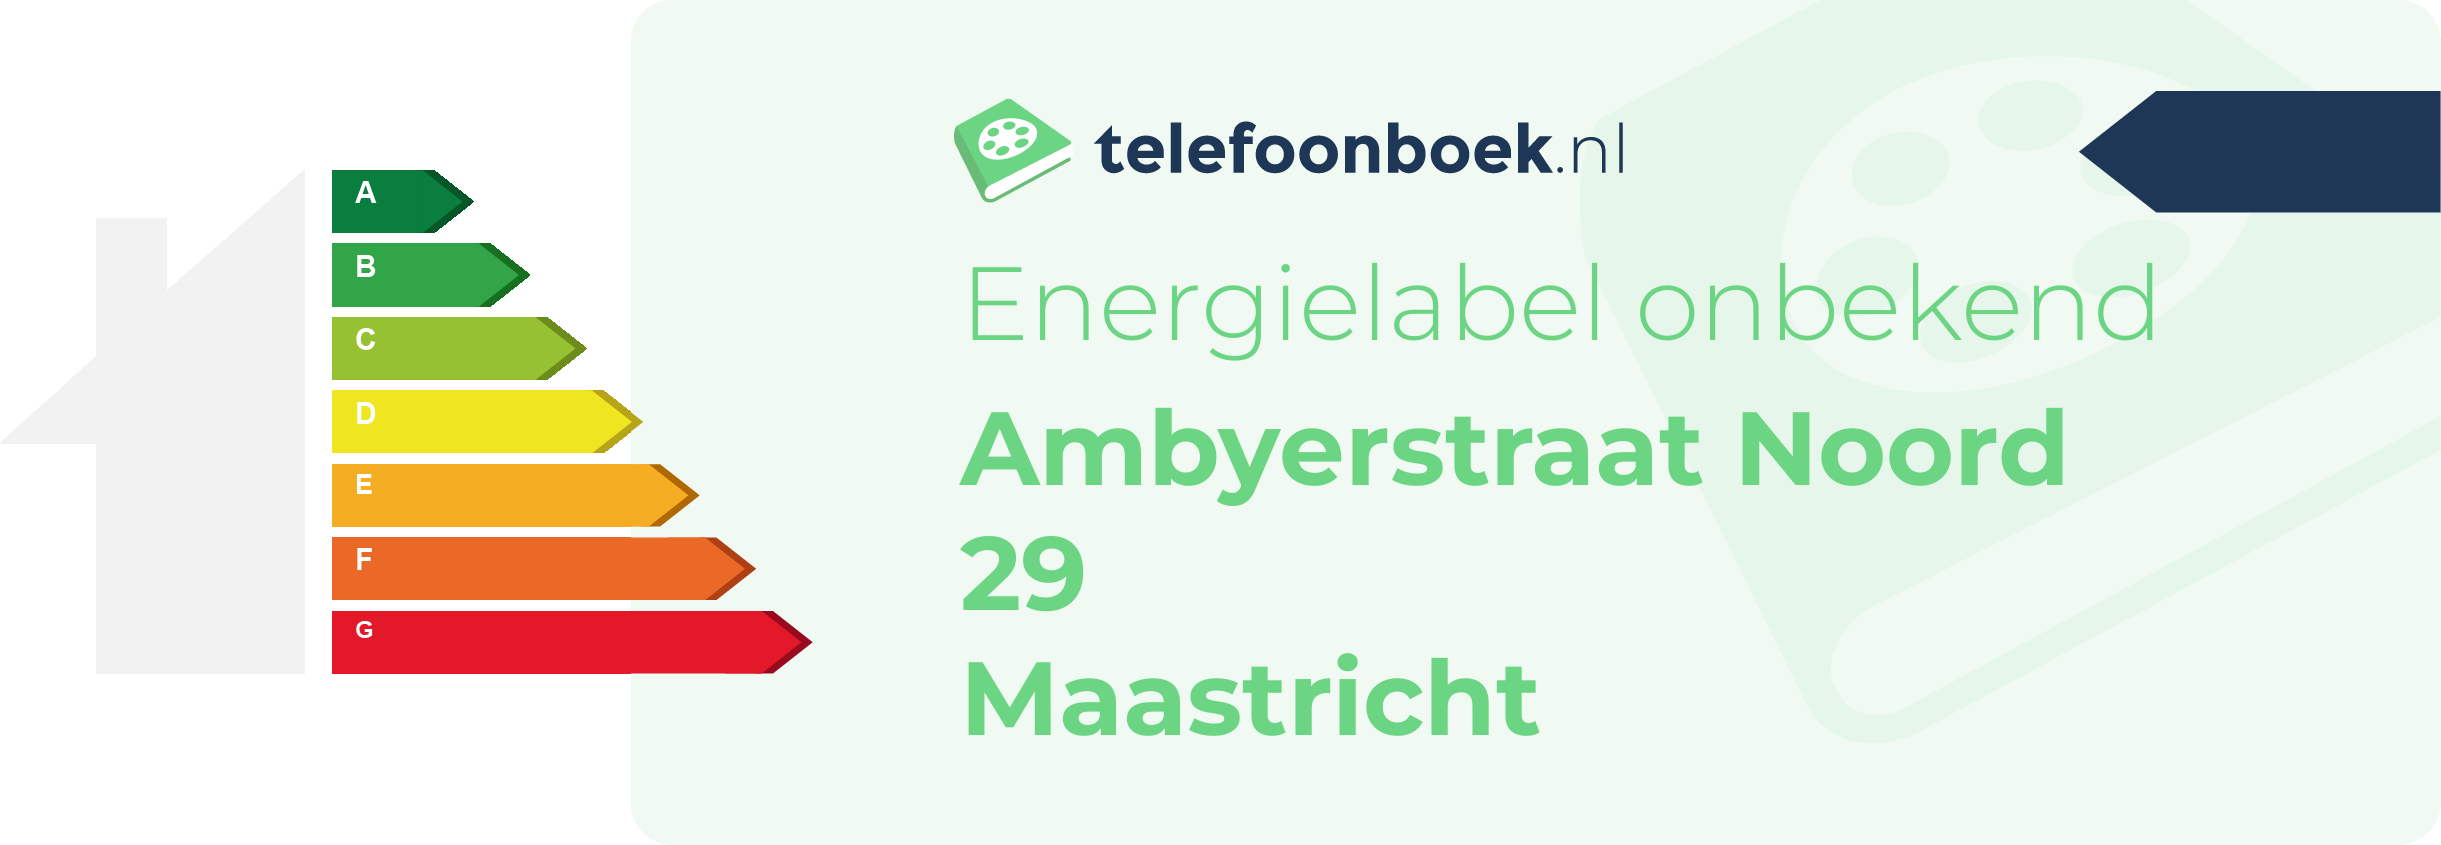 Energielabel Ambyerstraat Noord 29 Maastricht